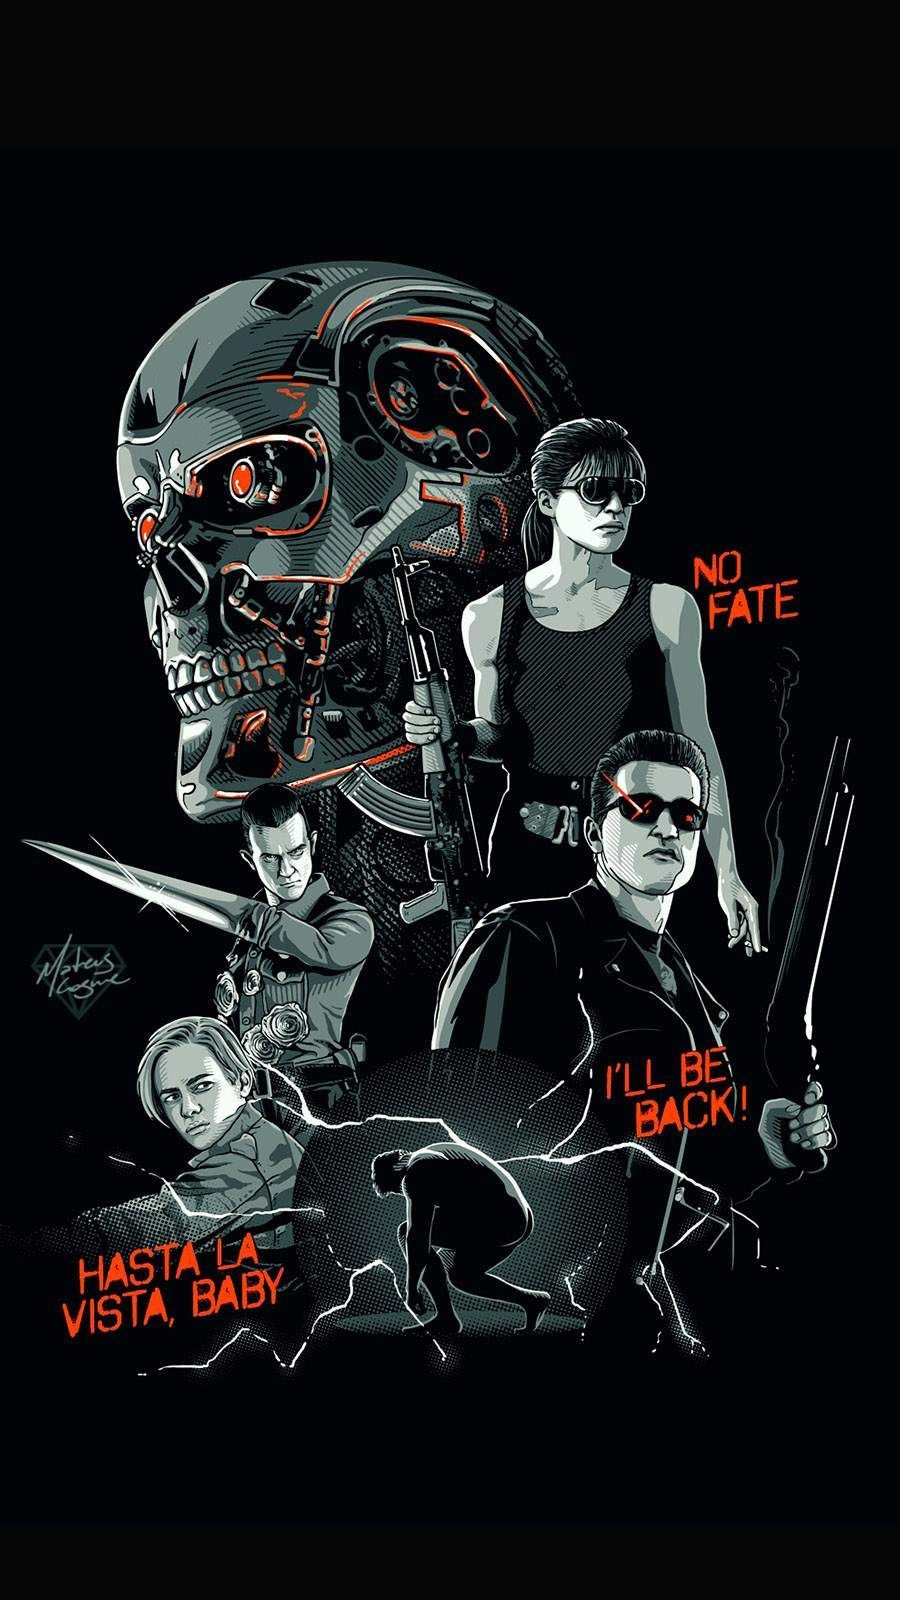 Terminator Poster iPhone Wallpaper. iPhone wallpaper music